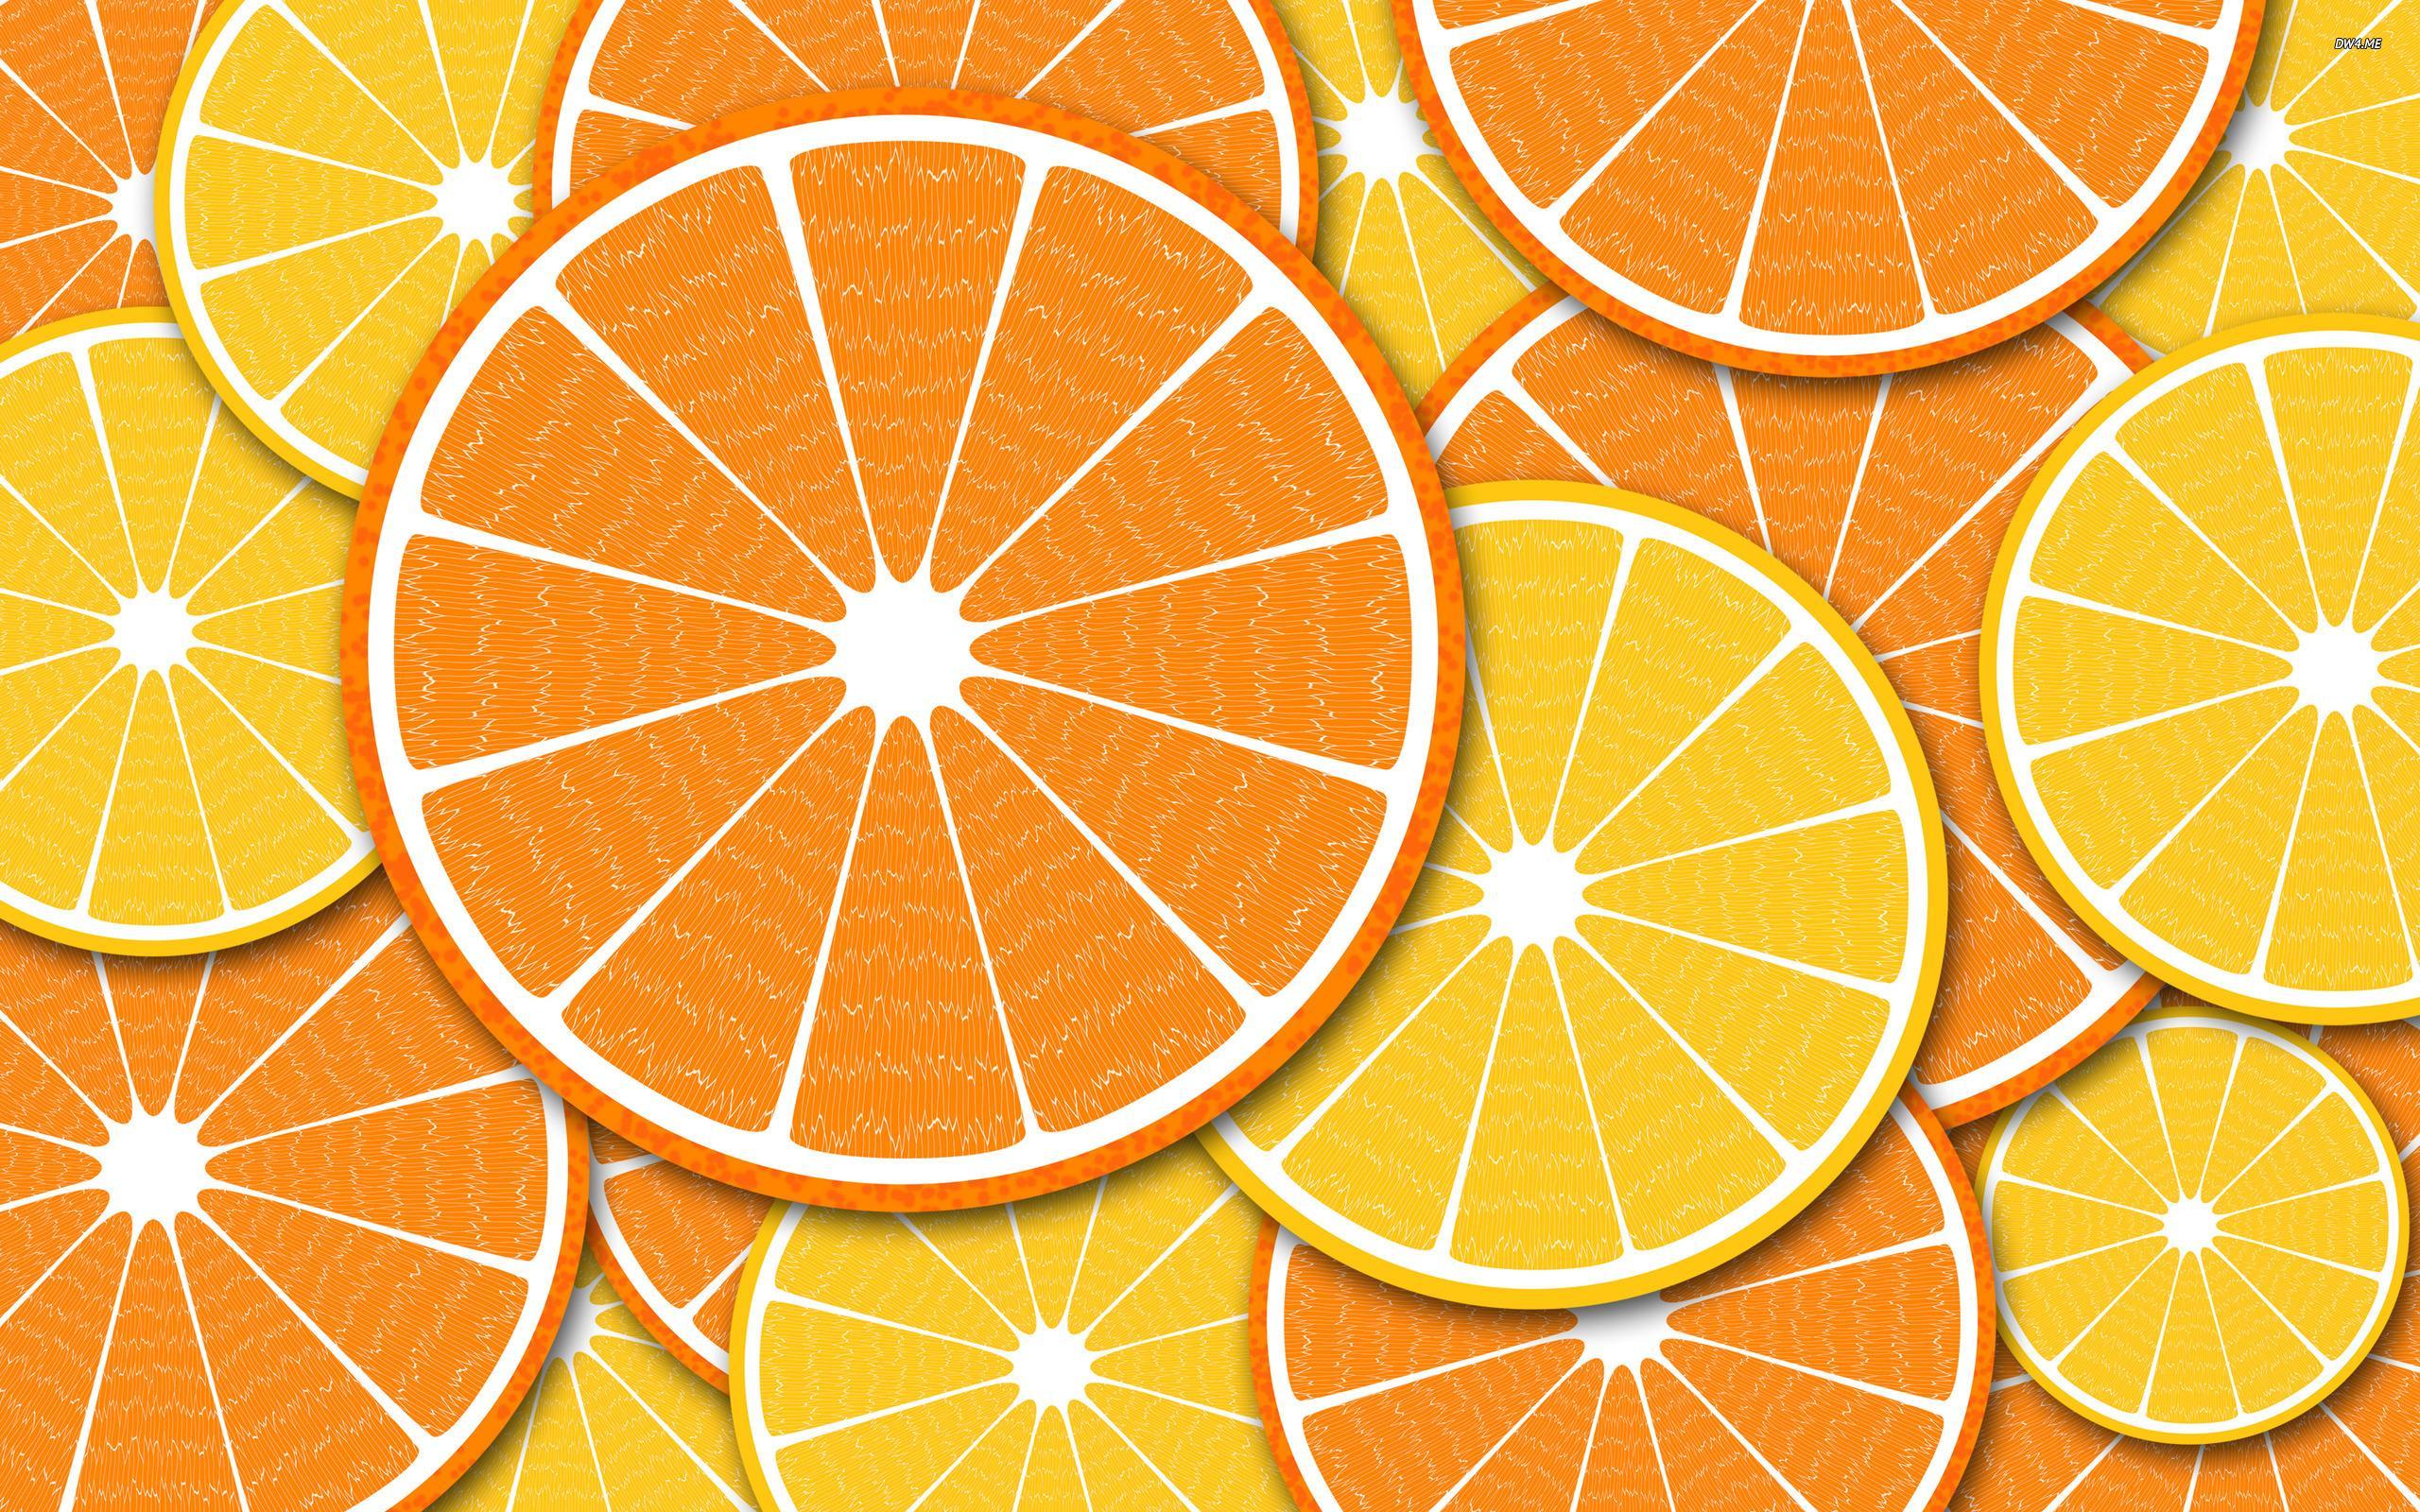 Oranges and lemons wallpaper wallpaper